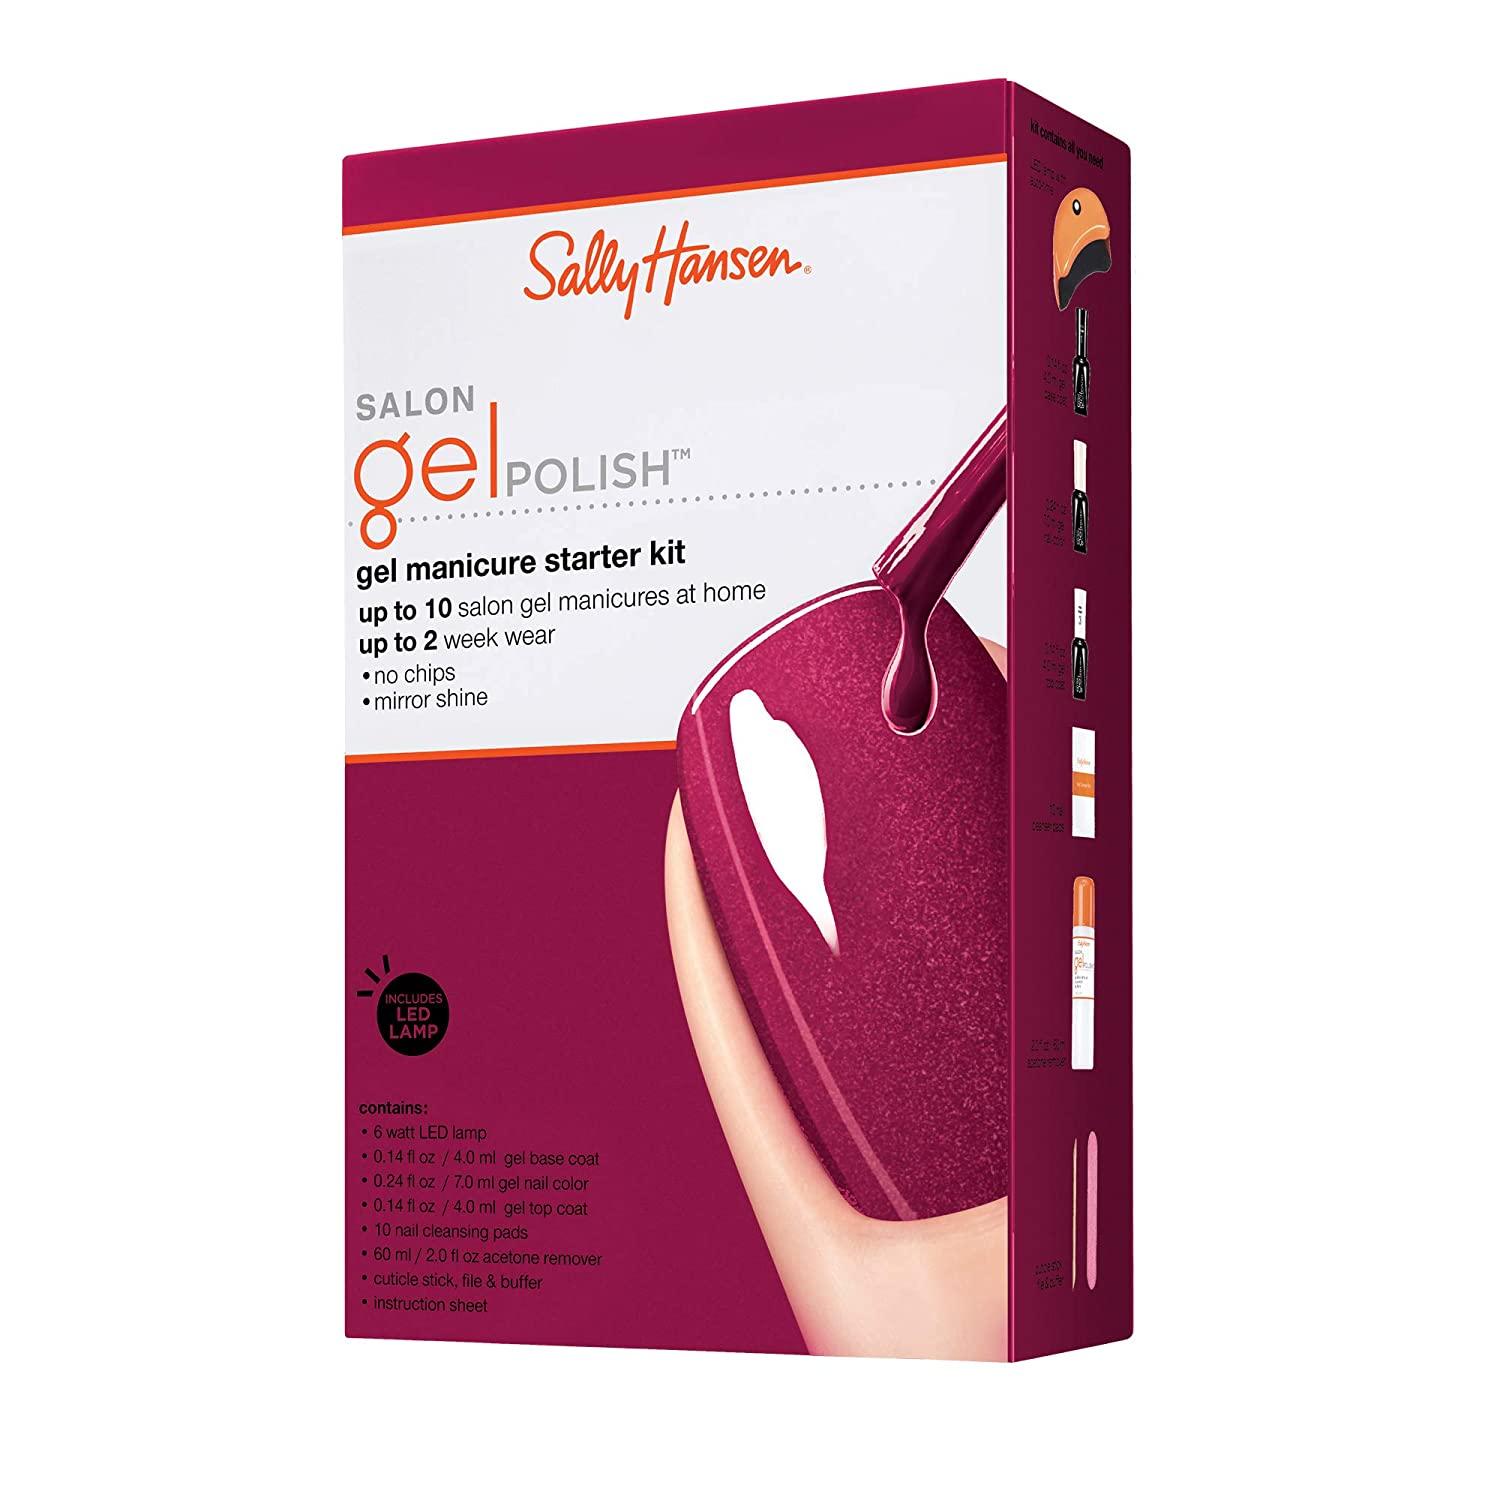 Sally Hansen Salon Insta Gel Strips Starter Kit, Wine Not